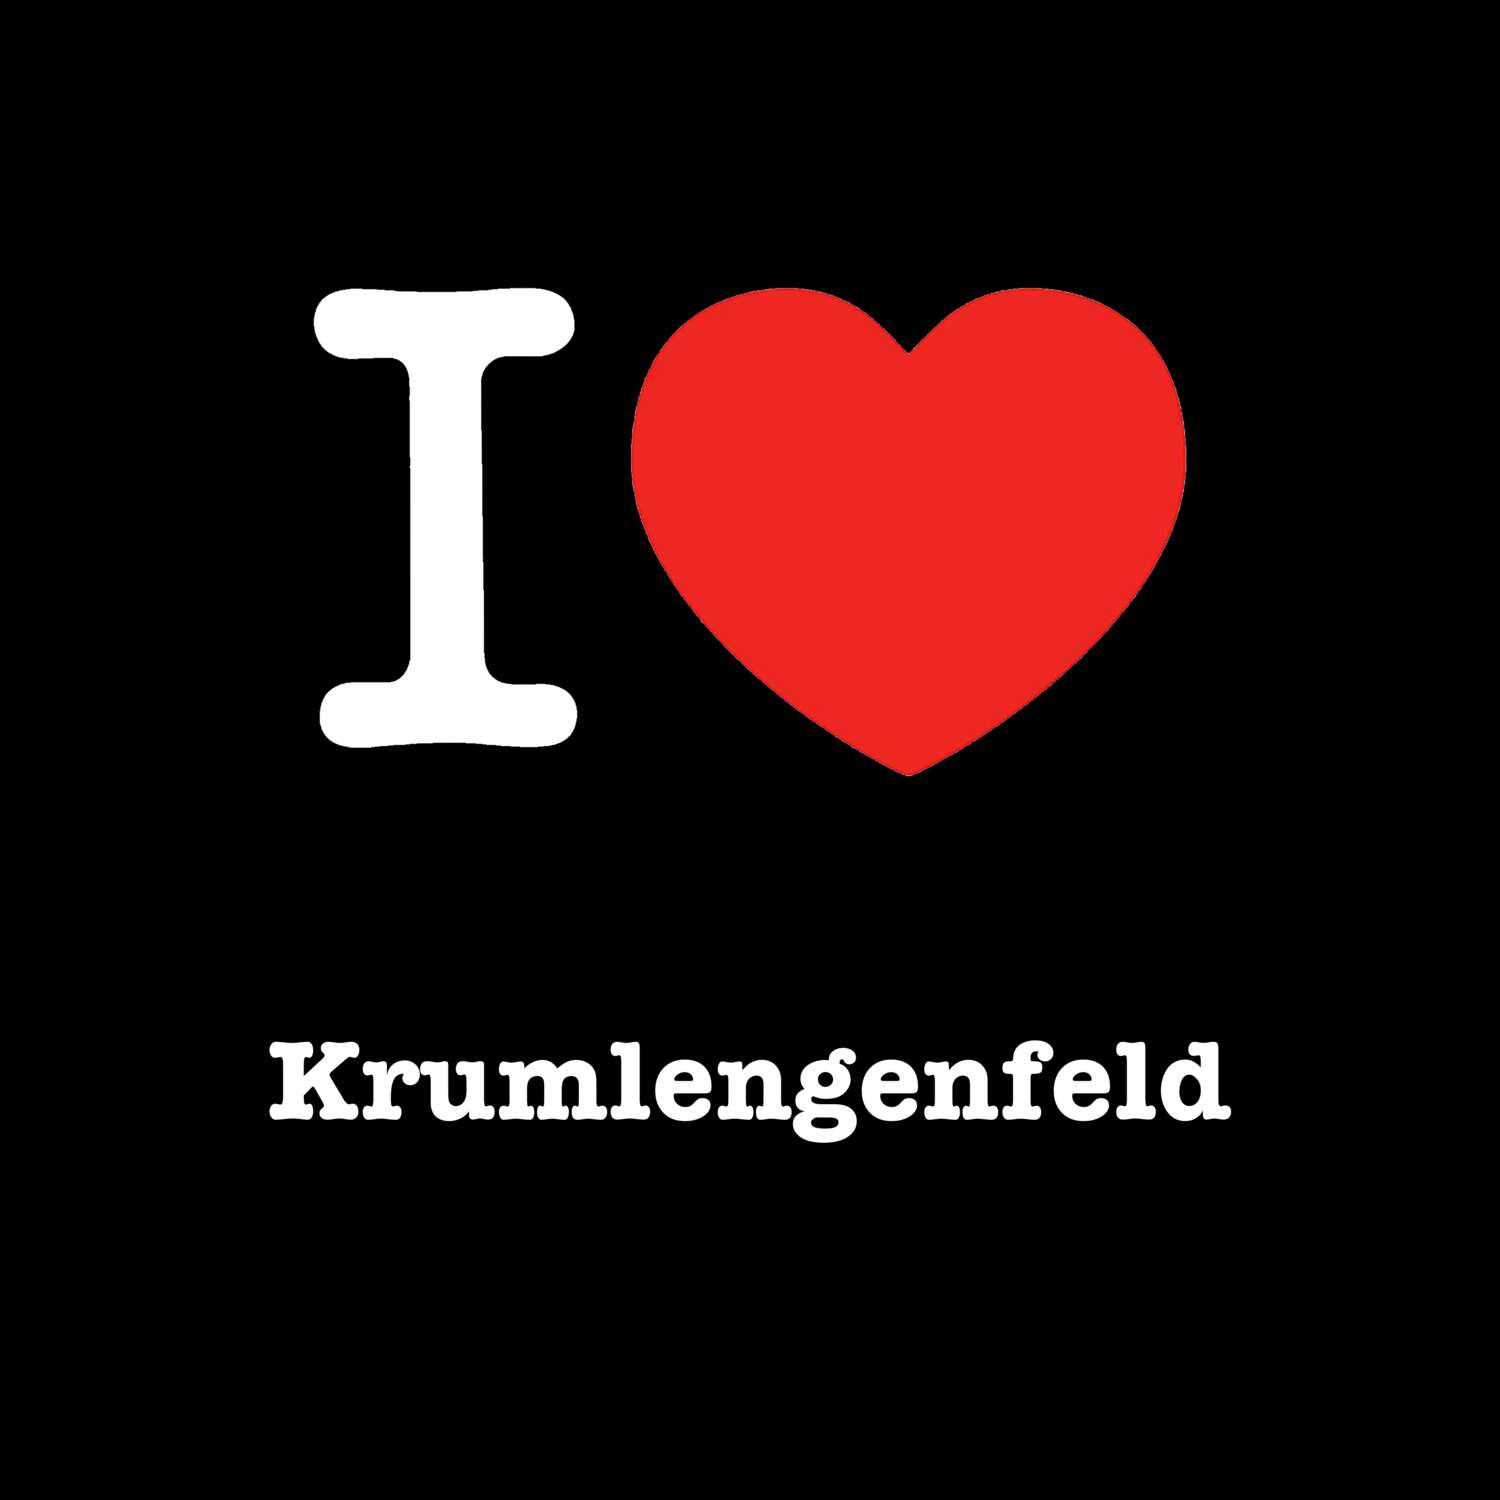 Krumlengenfeld T-Shirt »I love«